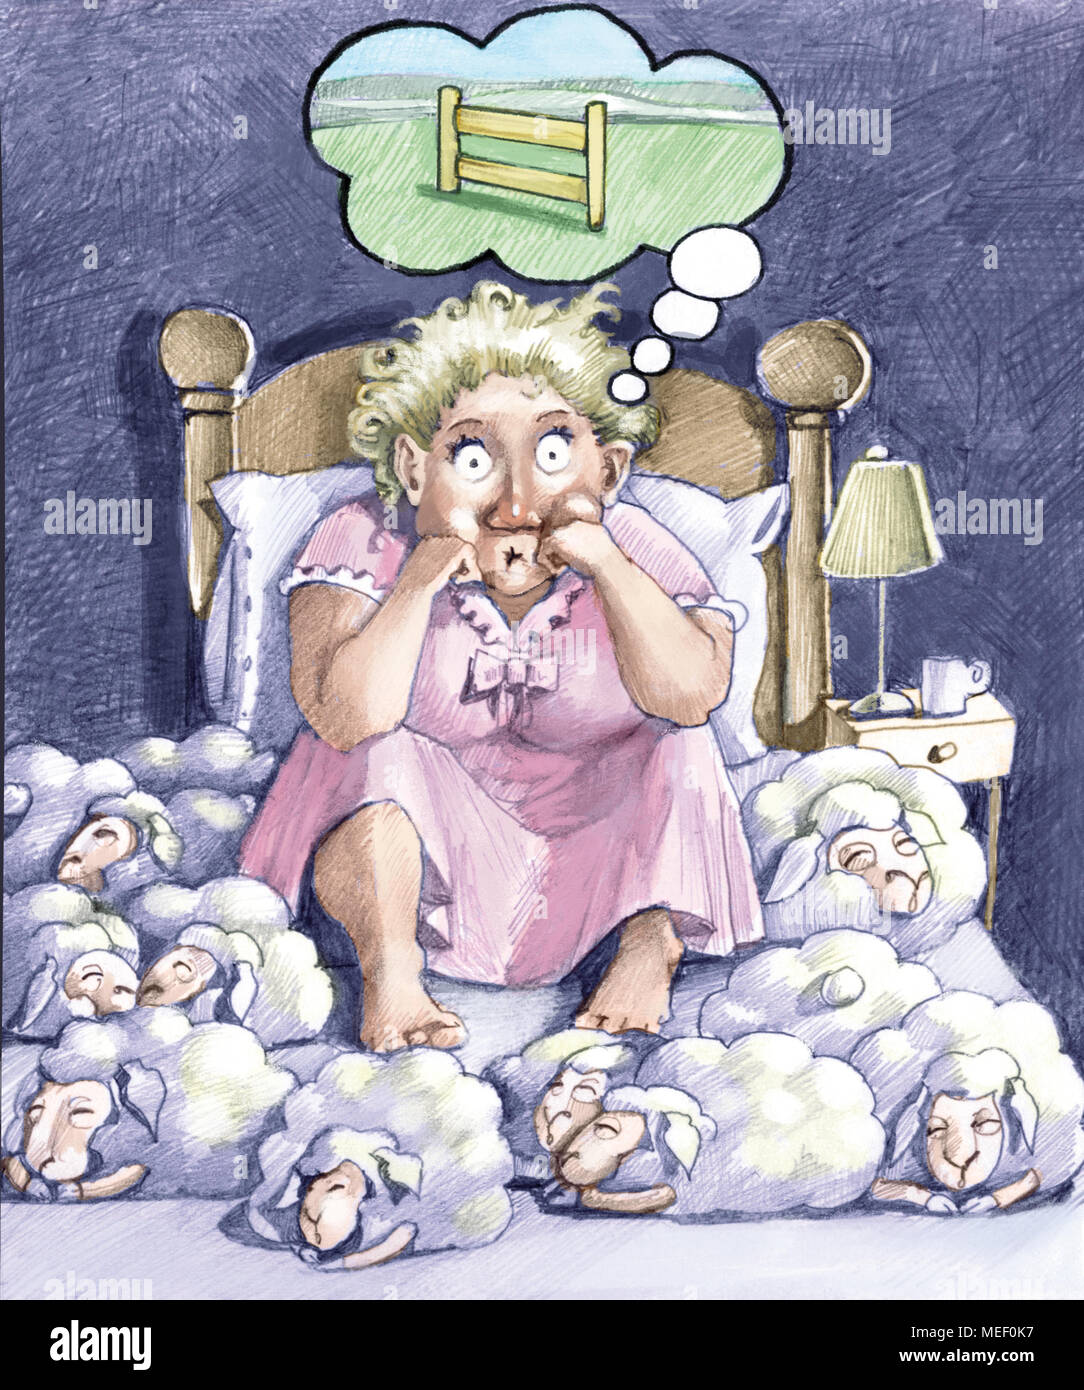 Angry Cartoon Sheep Banque D Image Et Photos Alamy